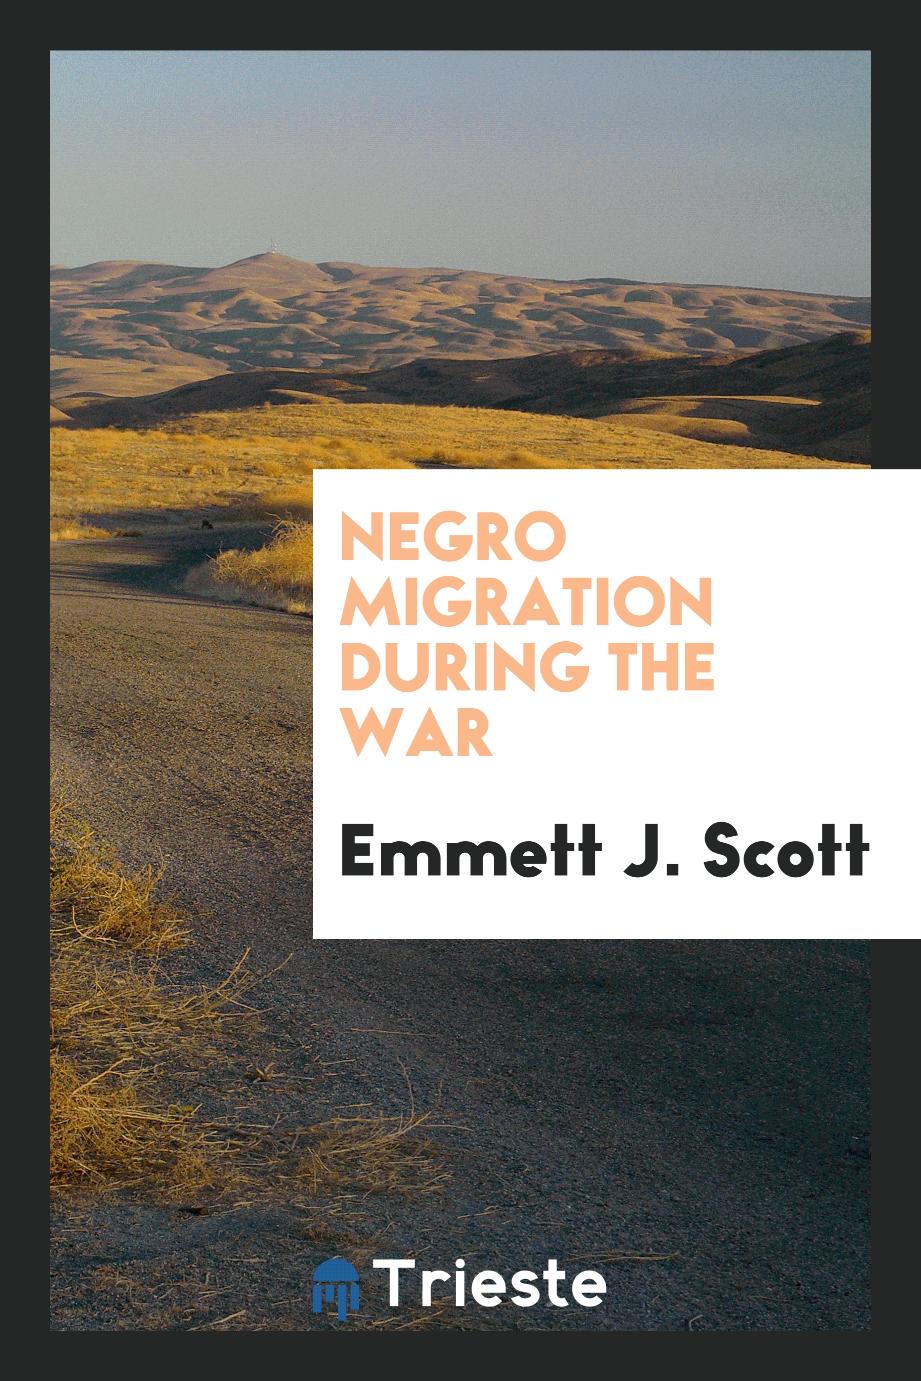 Emmett J. Scott - Negro migration during the war